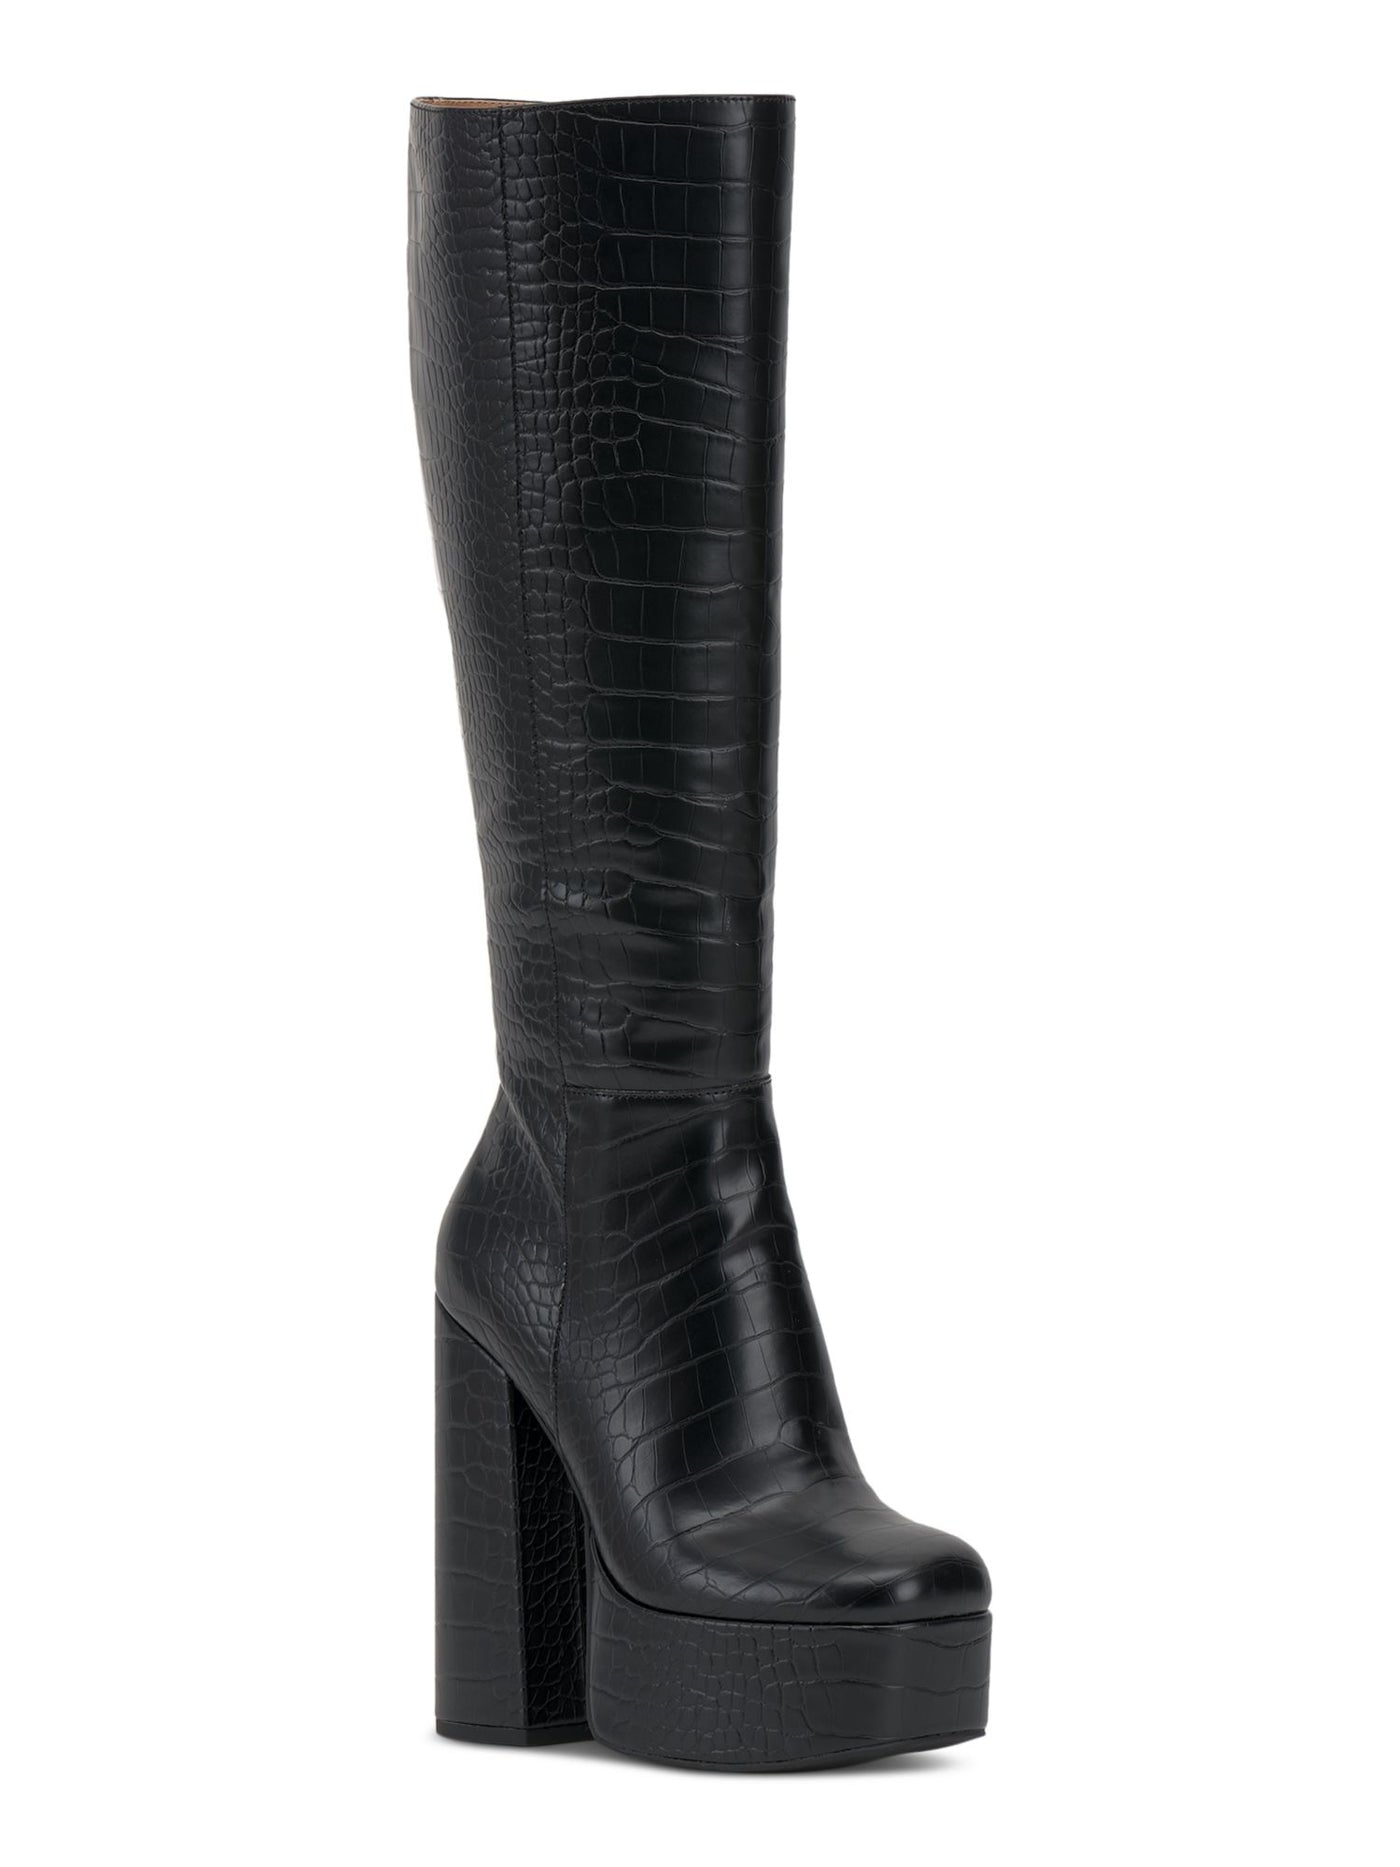 JESSICA SIMPSON Womens Black Animal Print 2" Platform Goring Padded Samah Square Toe Block Heel Zip-Up Dress Boots 6.5 M